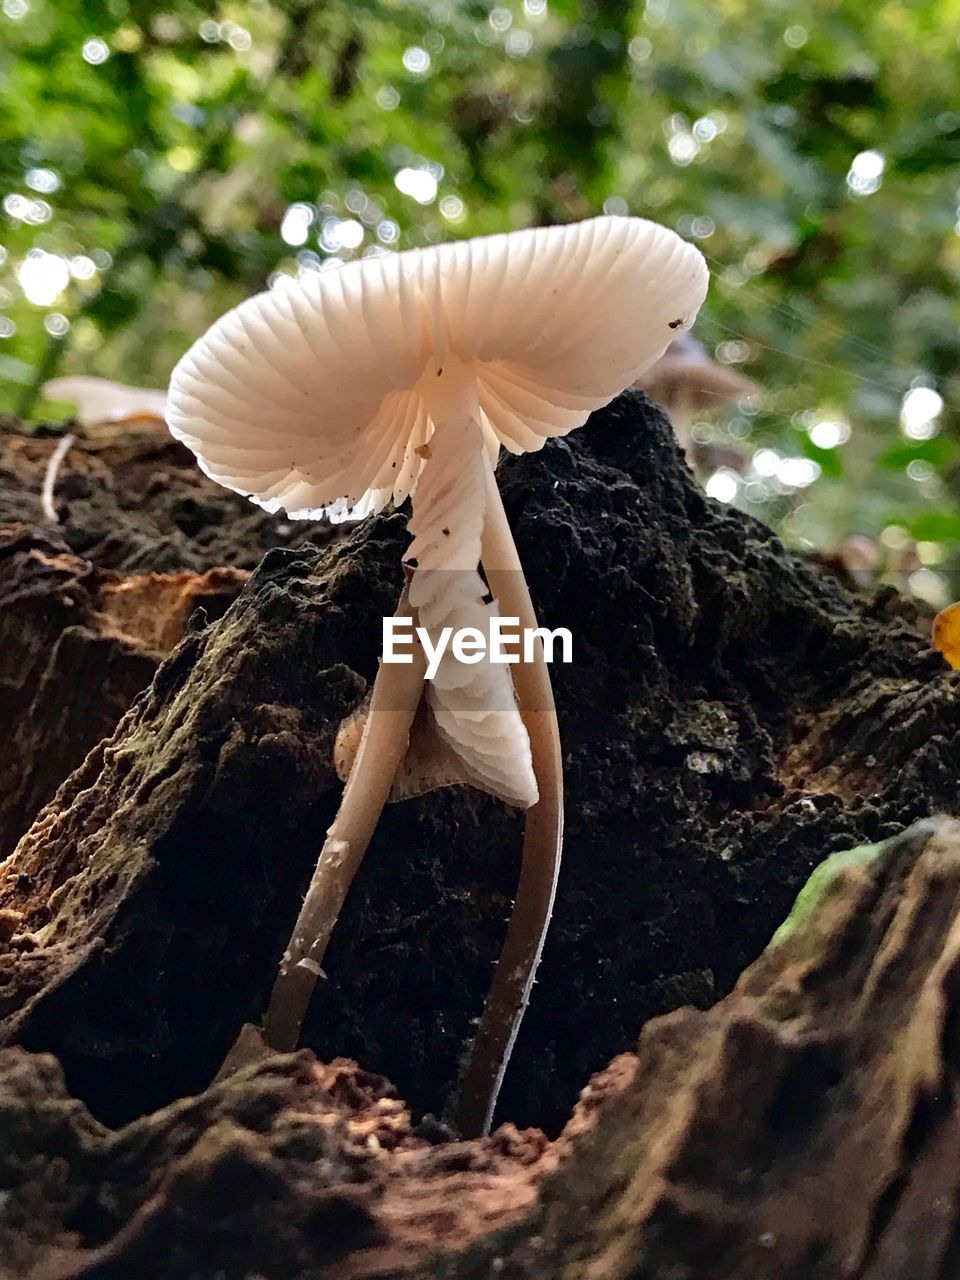 Close-up of wild mushroom growing on tree trunk